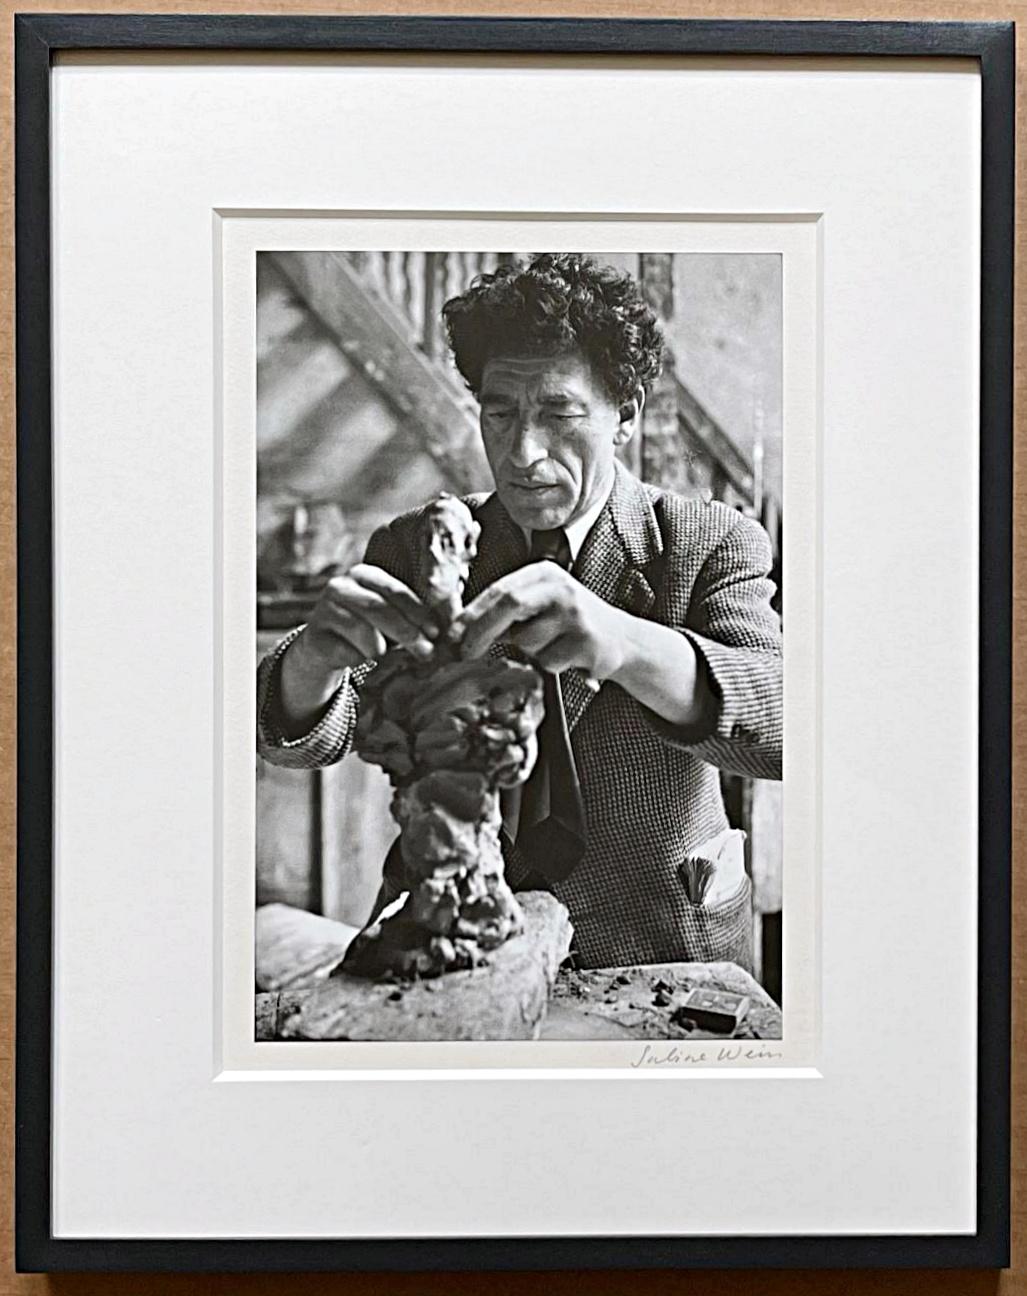 Alberto Giacometti dans son Atelier, 1954 (Giacometti in his studio) - Photograph by Sabine Weiss